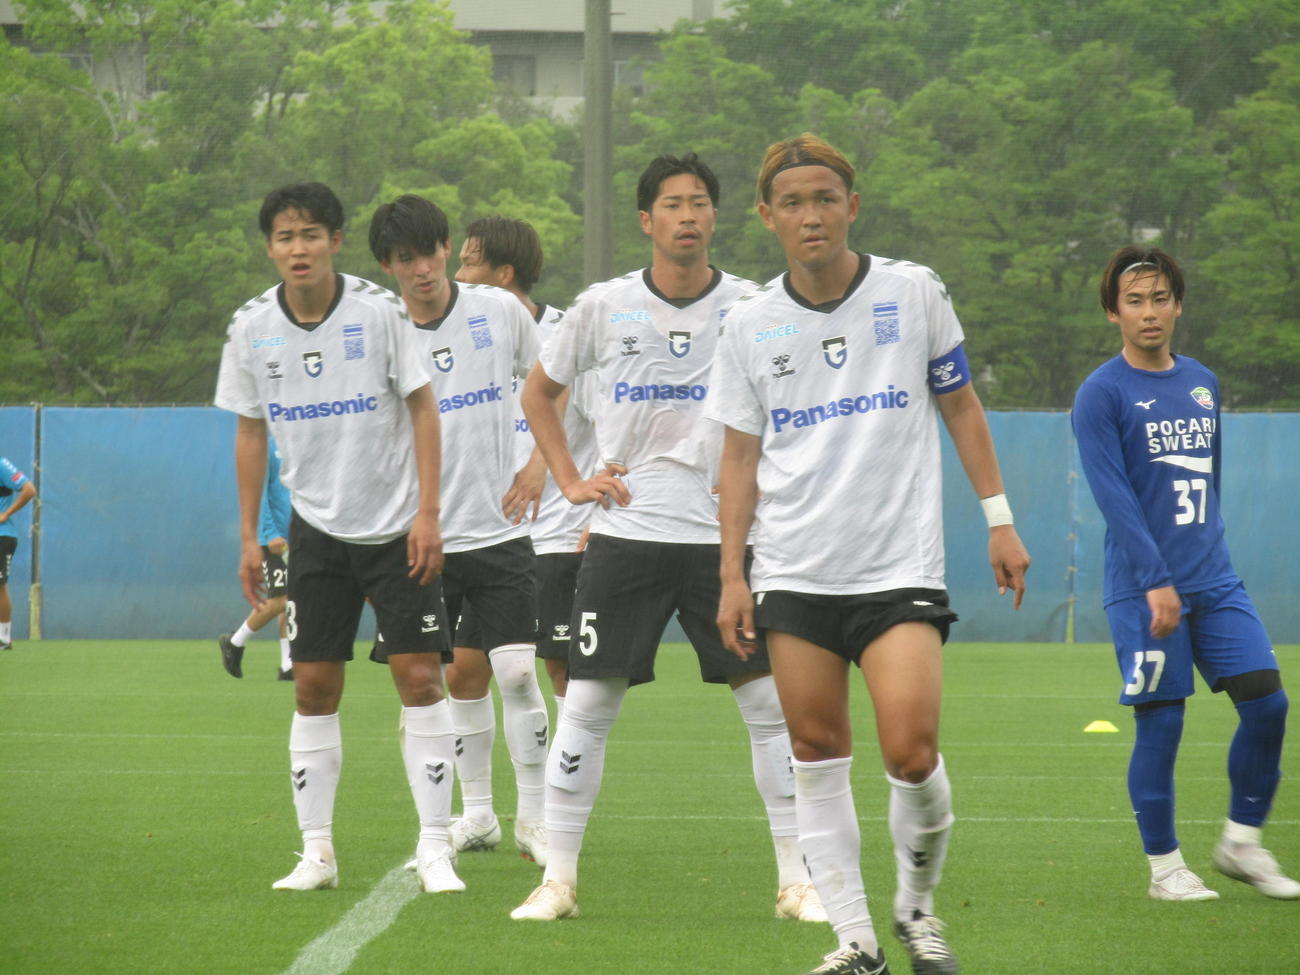 G大阪宇佐美（右から2番目）はJ2徳島との練習試合でセットプレーの守備に入る